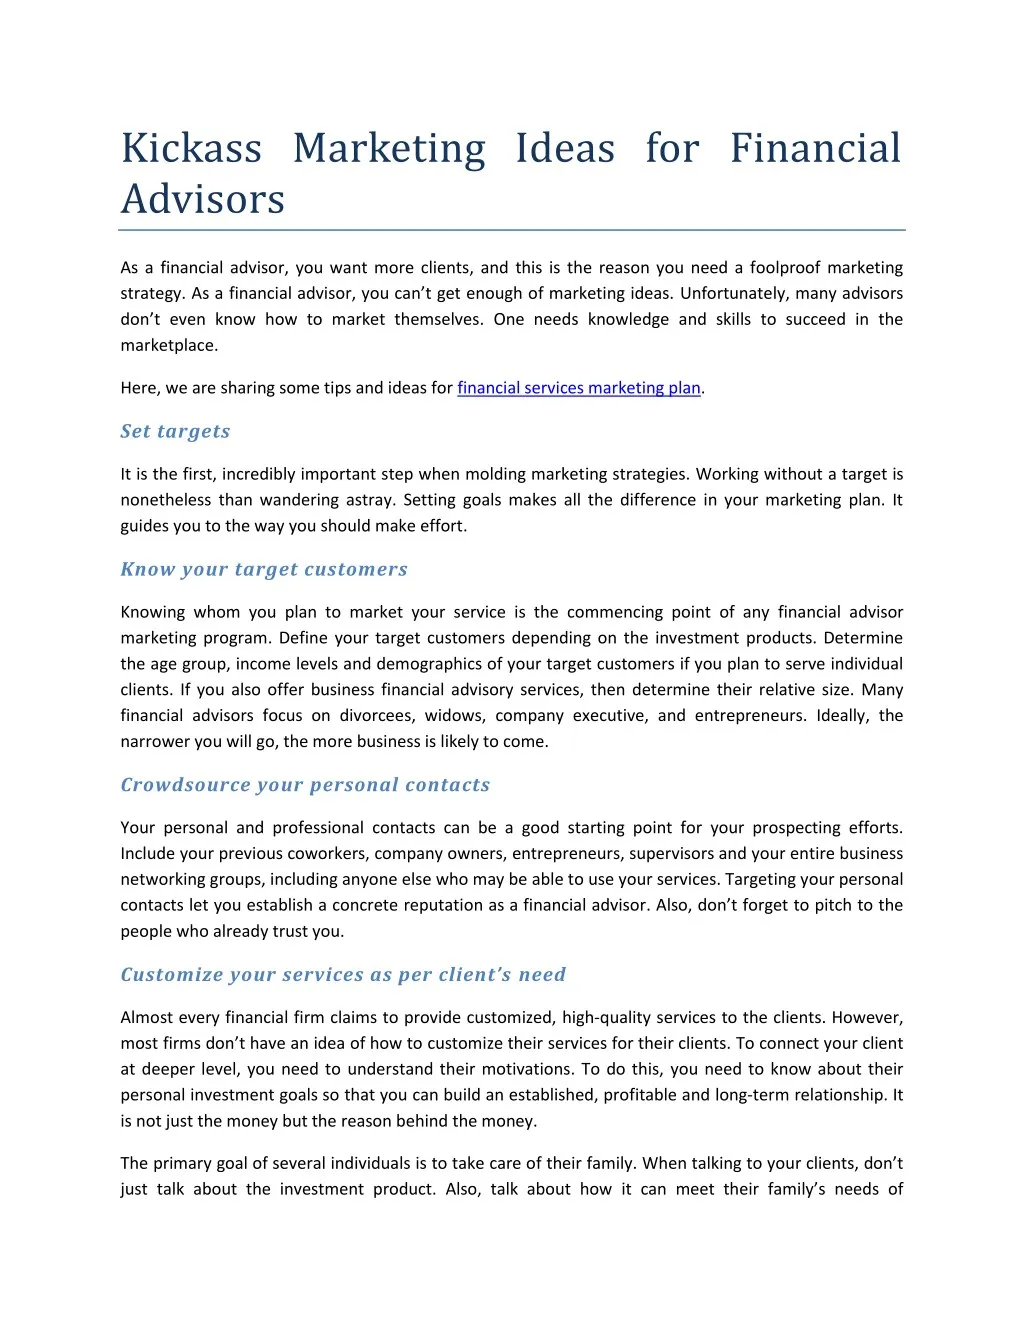 kickass marketing ideas for financial advisors